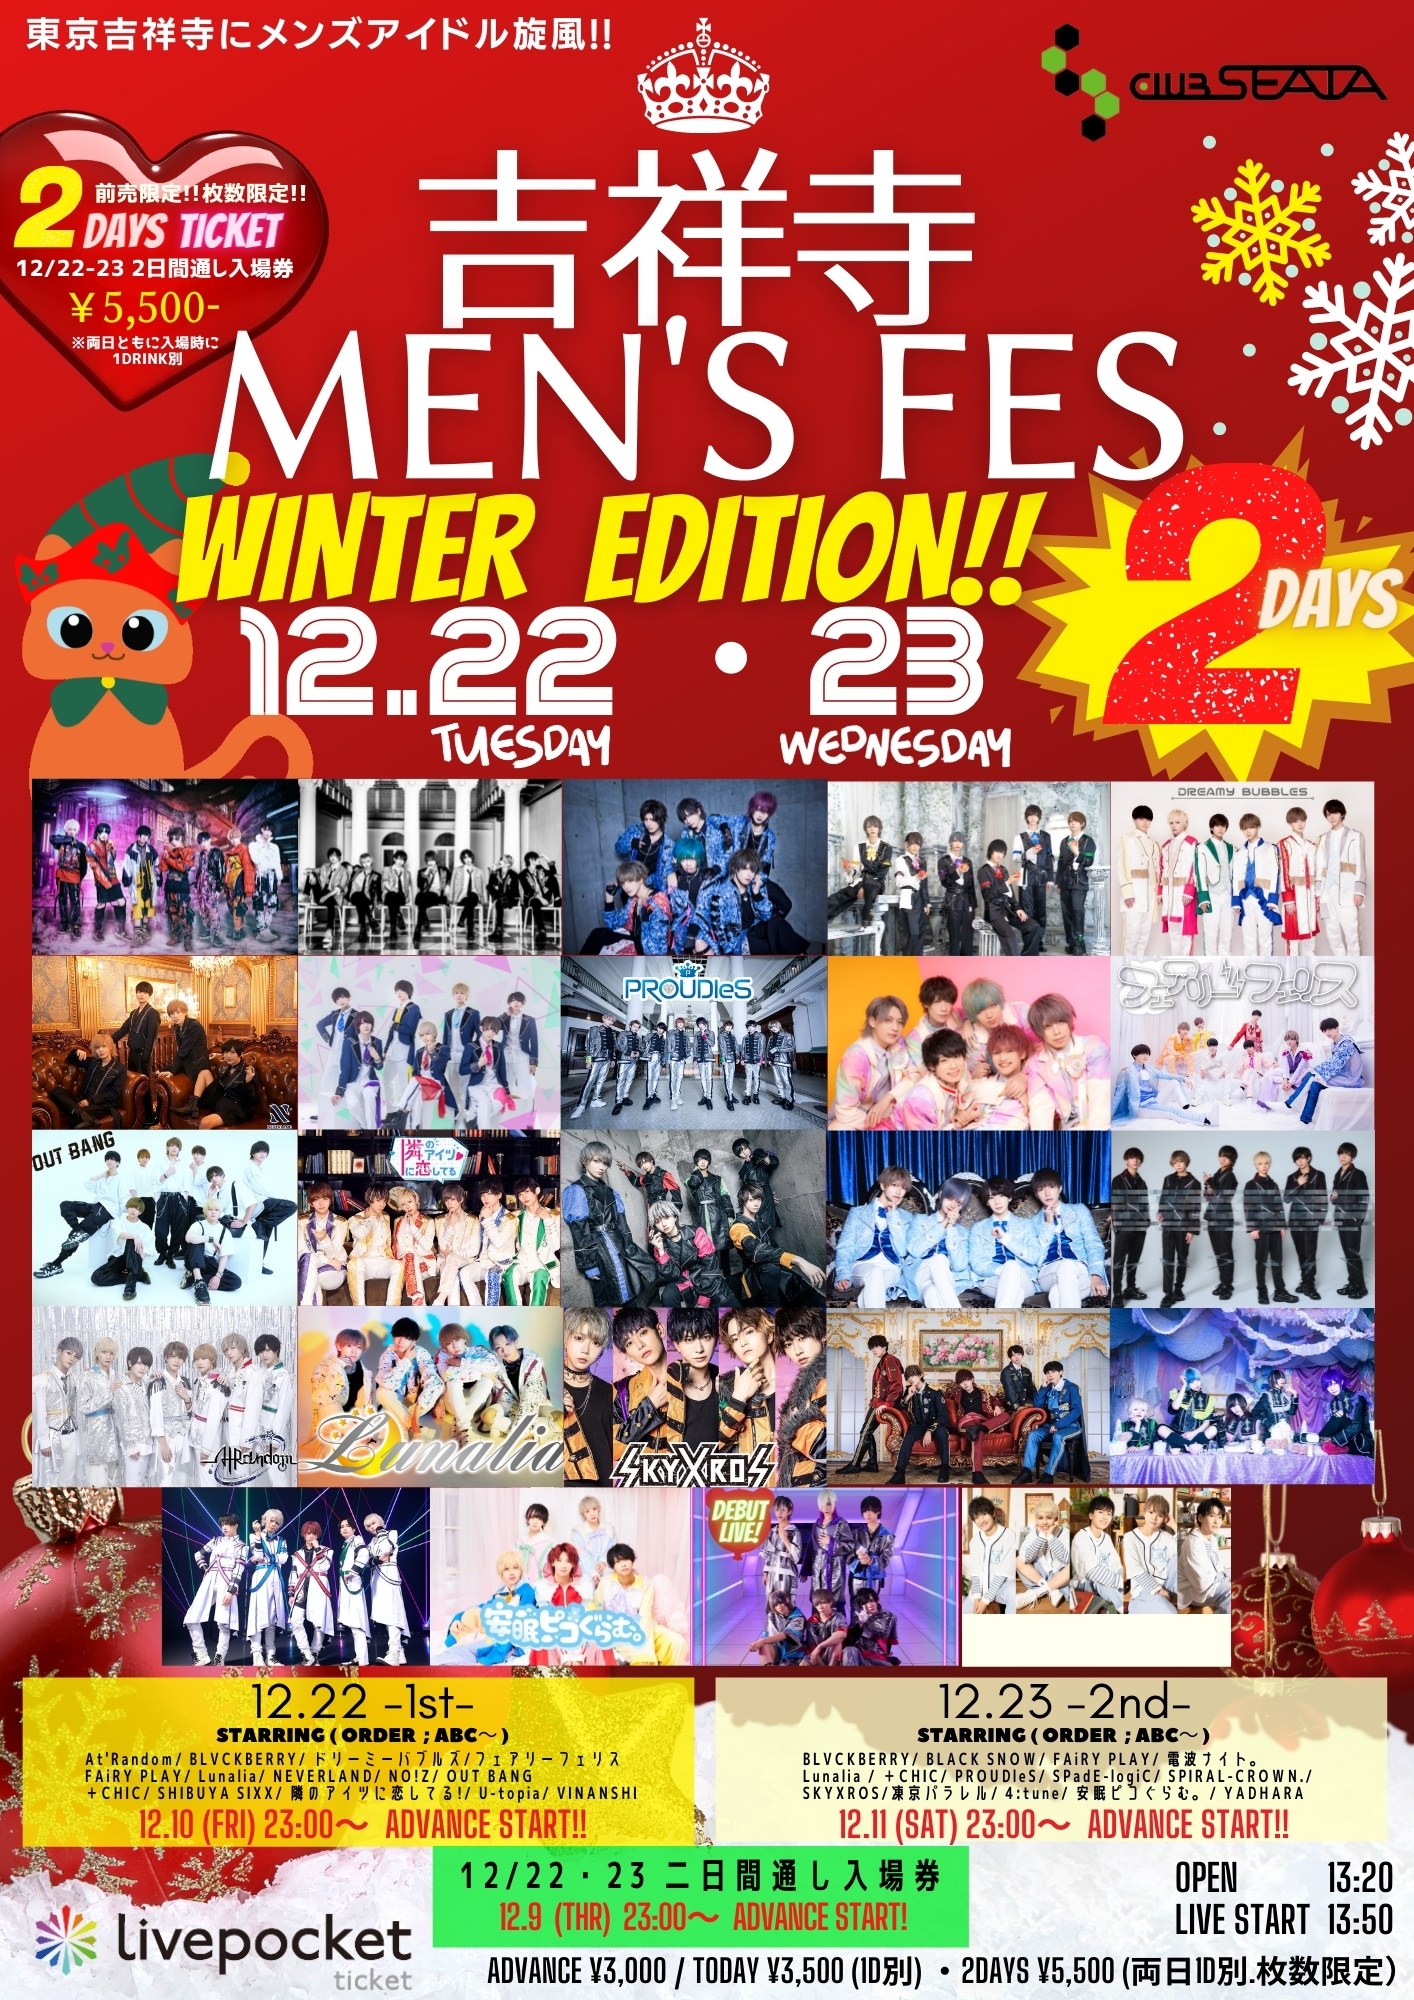 12/22-23 吉祥寺 Men'sFES -WINTER EDITION -二日間通し前売入場券